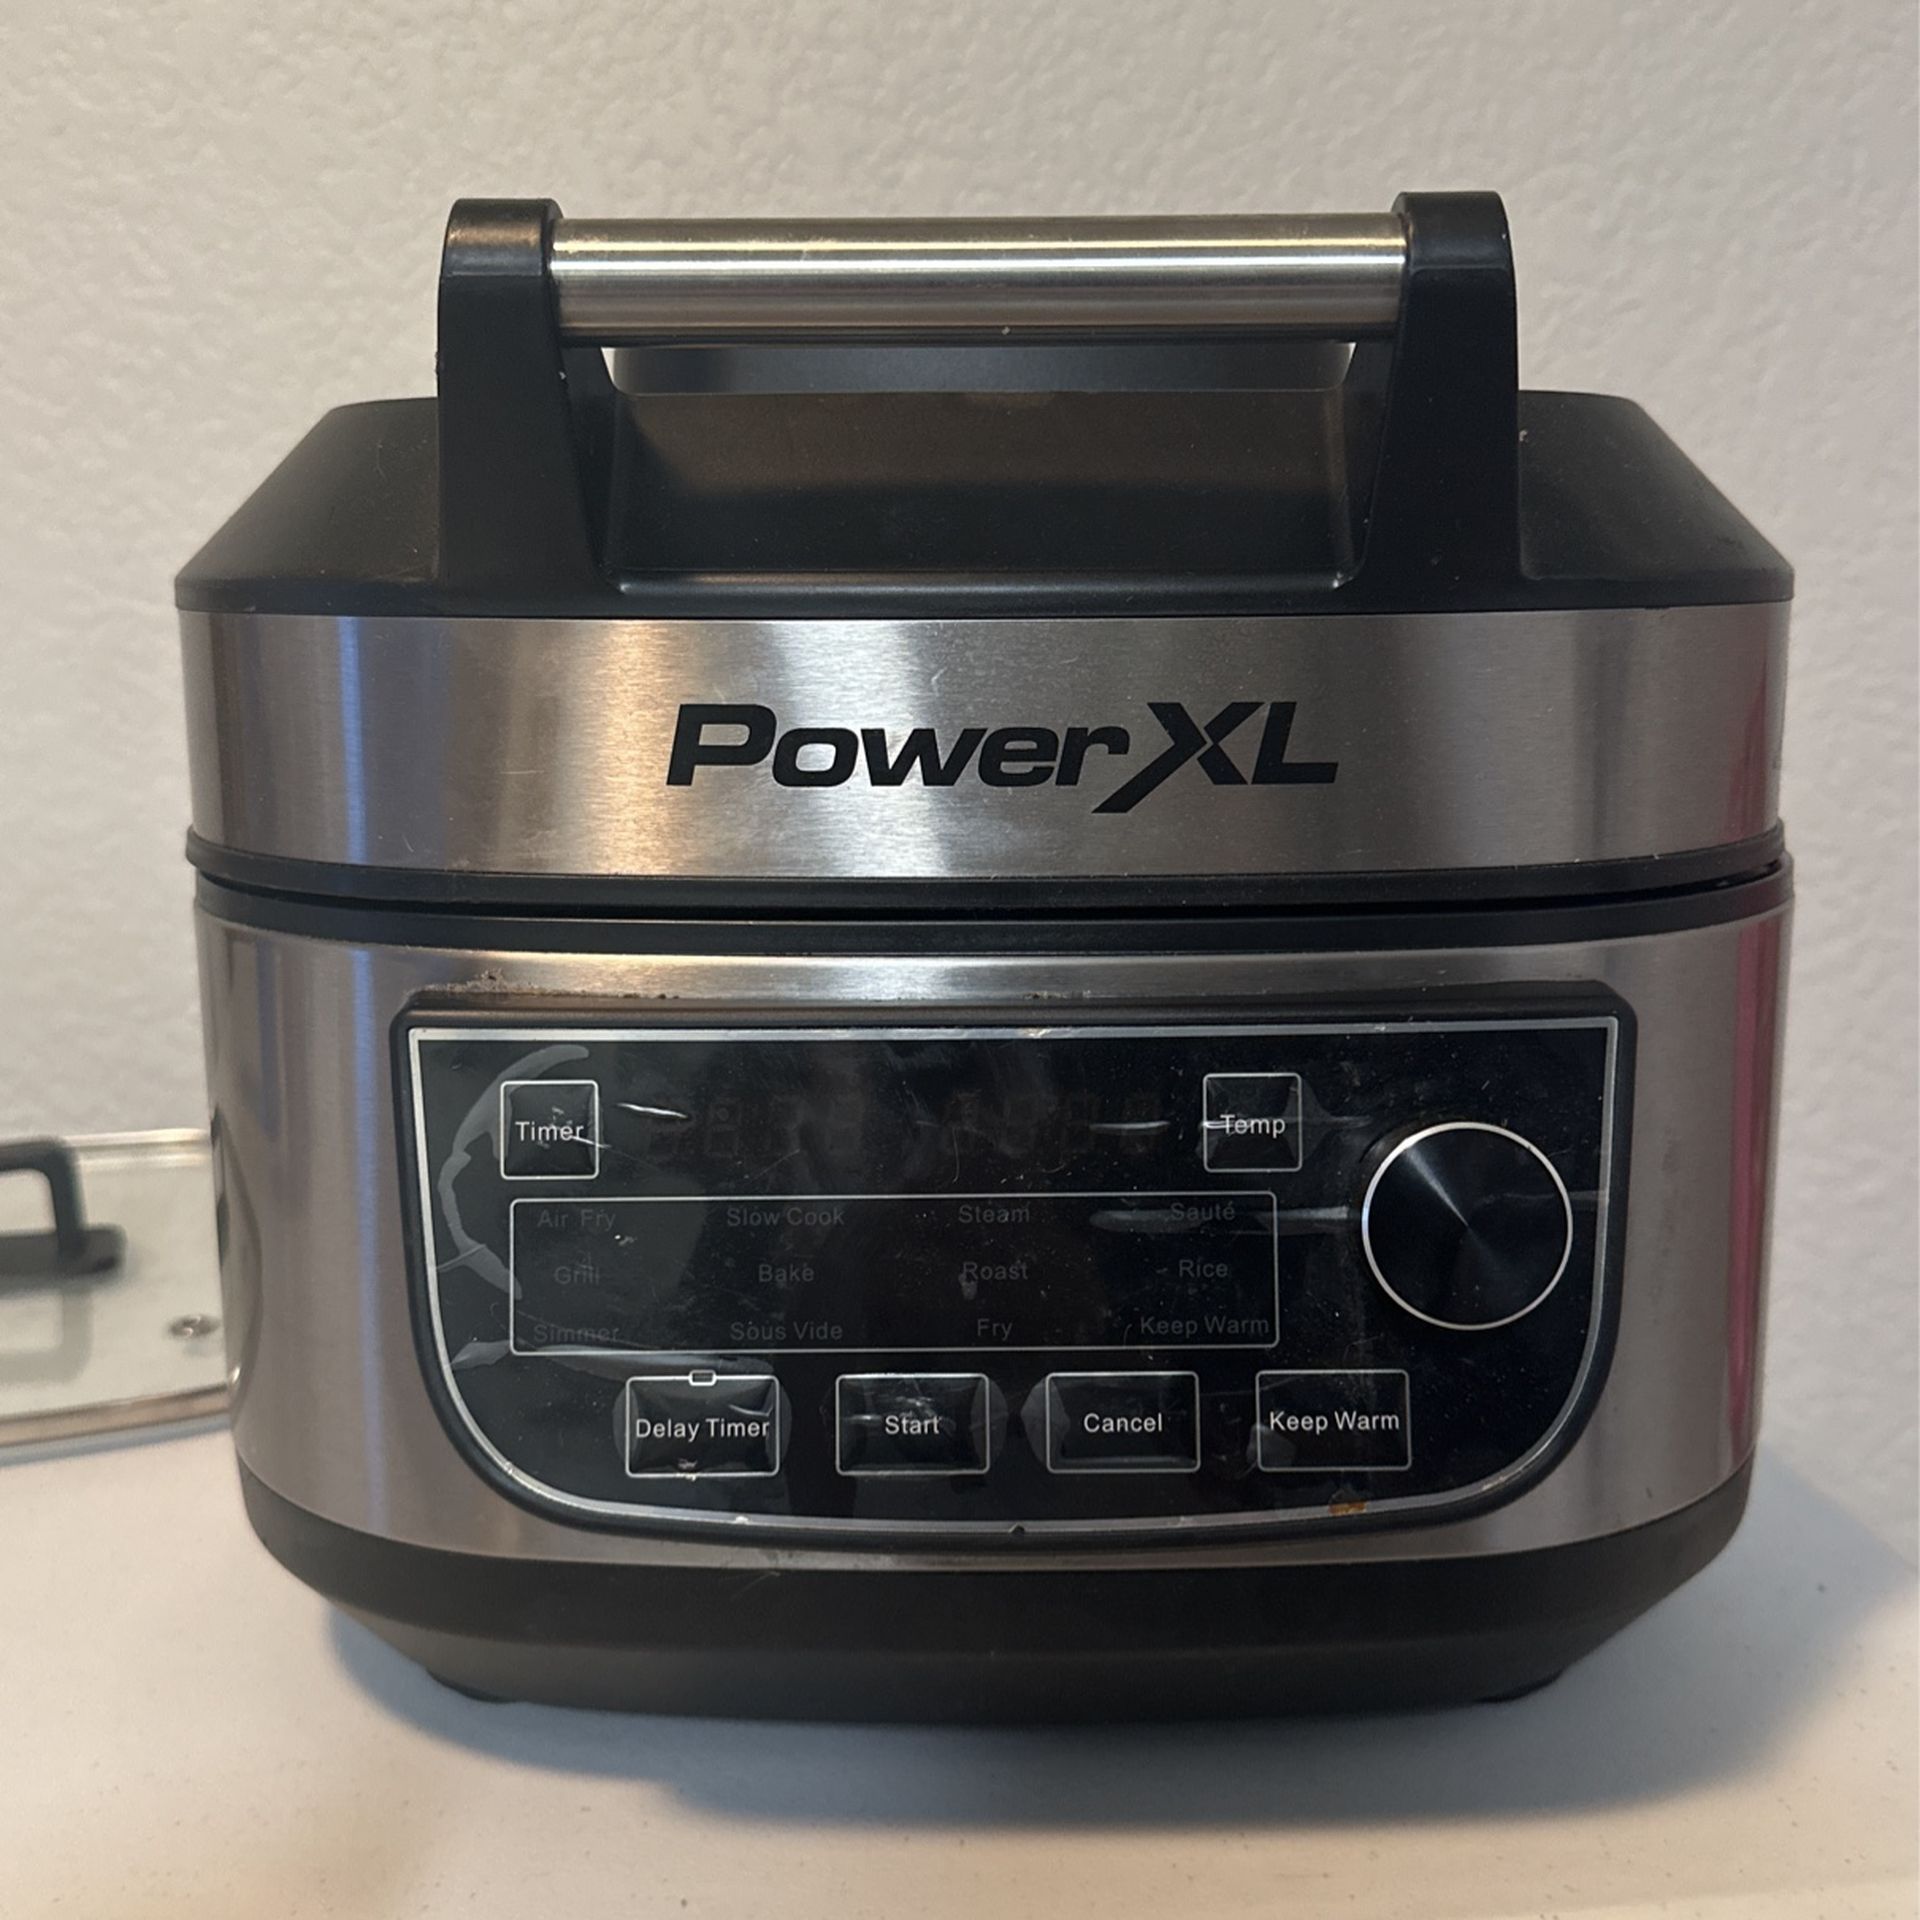 Power XL Air Fryer (multiple Modes)